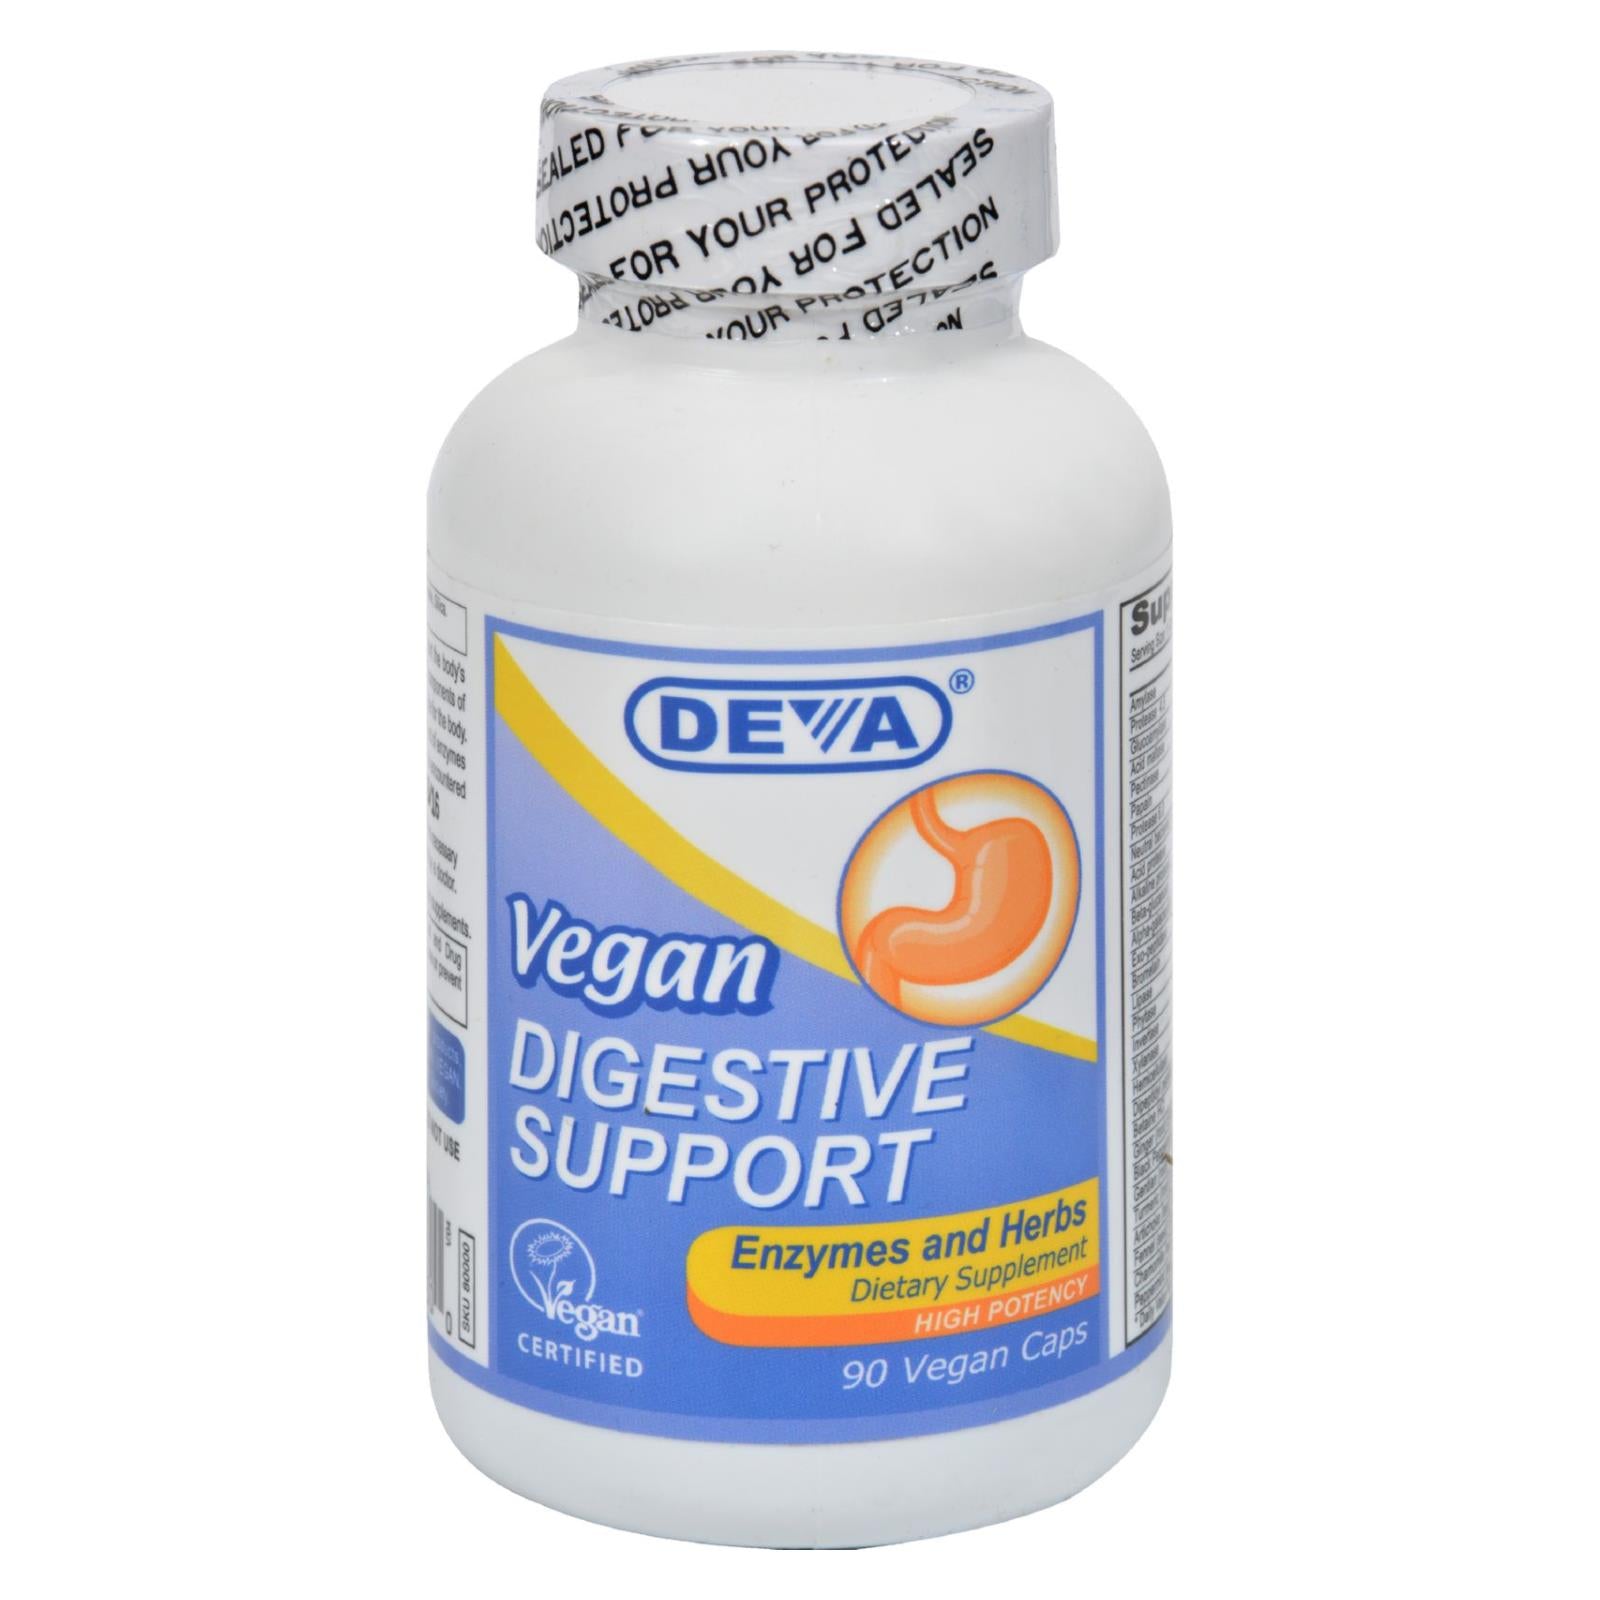 Deva Vegan Digestive Support - 90 Vegan Capsules